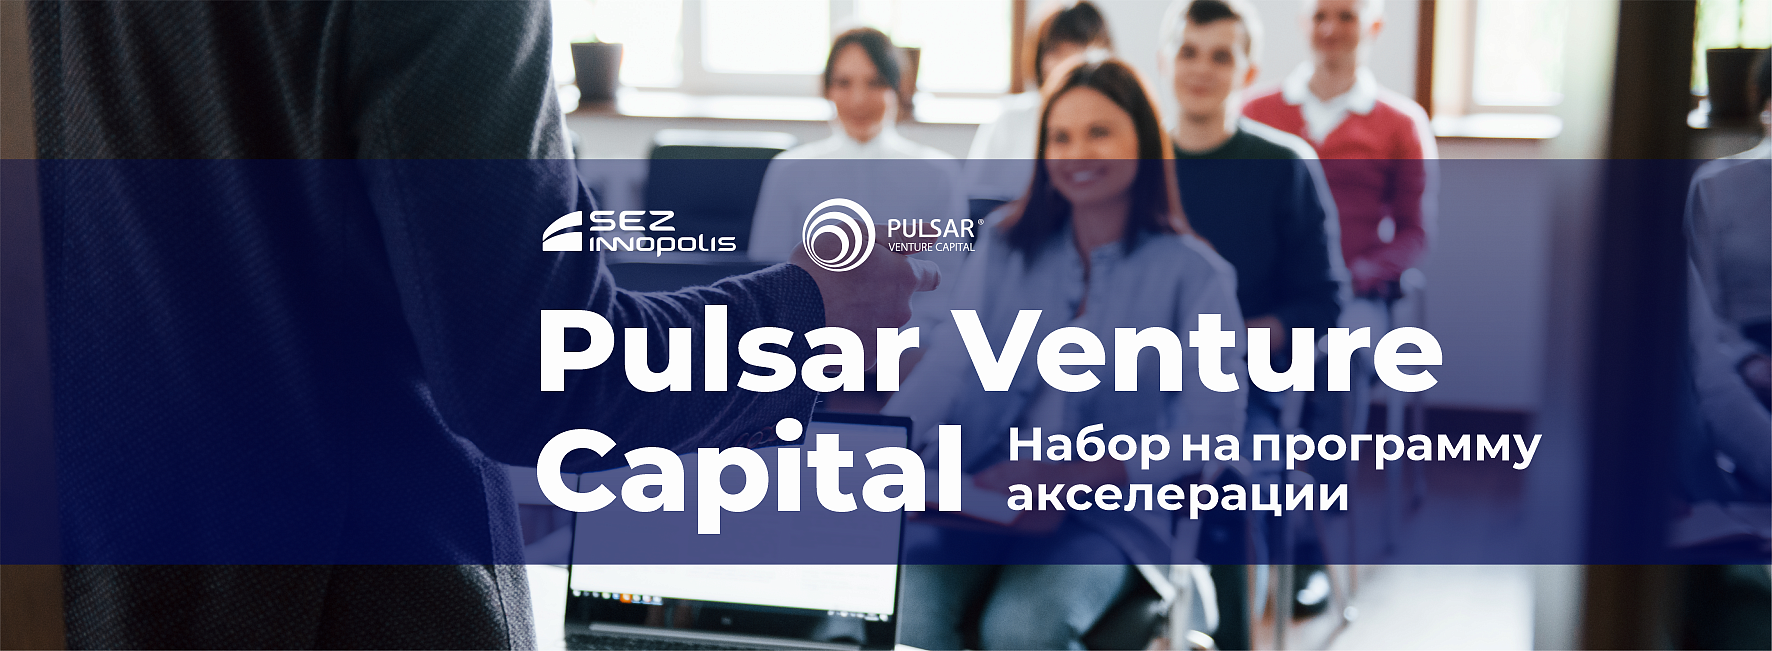 Набор на программу акселерации Pulsar Venture Capital